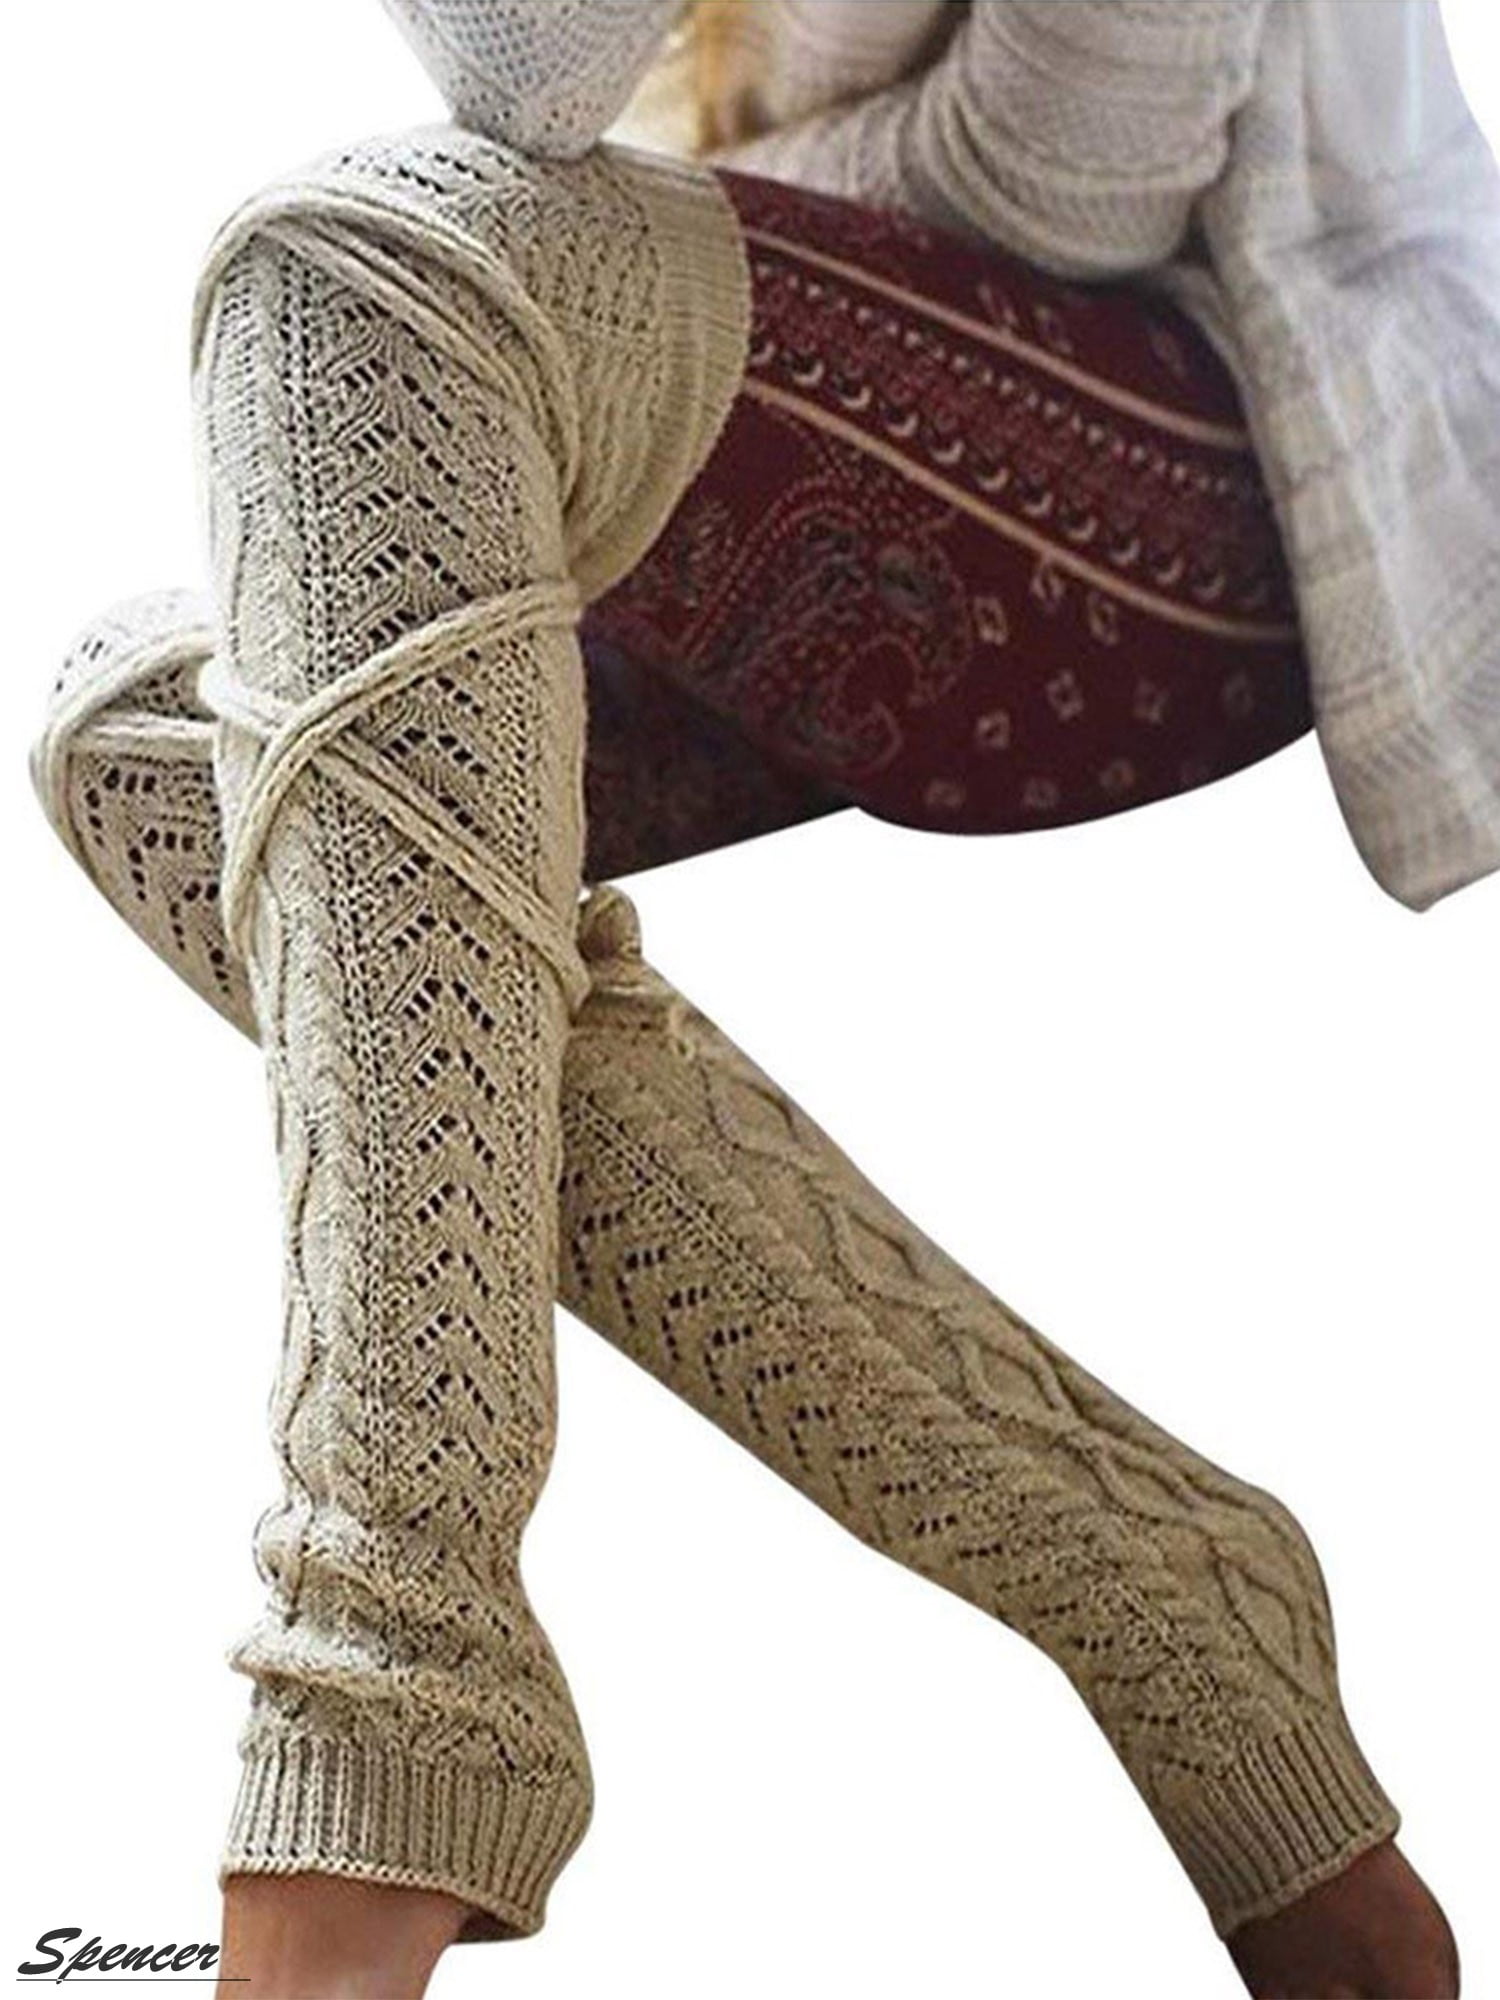 6 Pairs Knit Leg Warmers Arm Warmers Set for Women Cable Knit Leg Warmers  Knee Warmers Thigh High Socks Girls